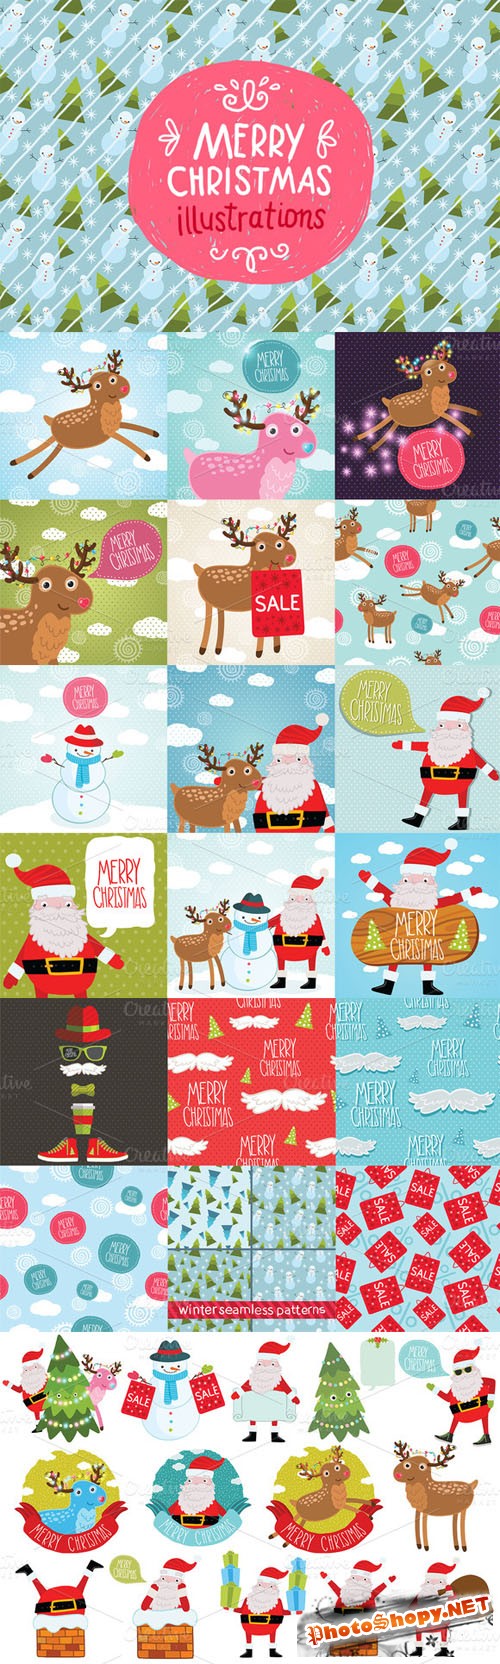 Creativemarket - Merry Christmas illustrations 16863